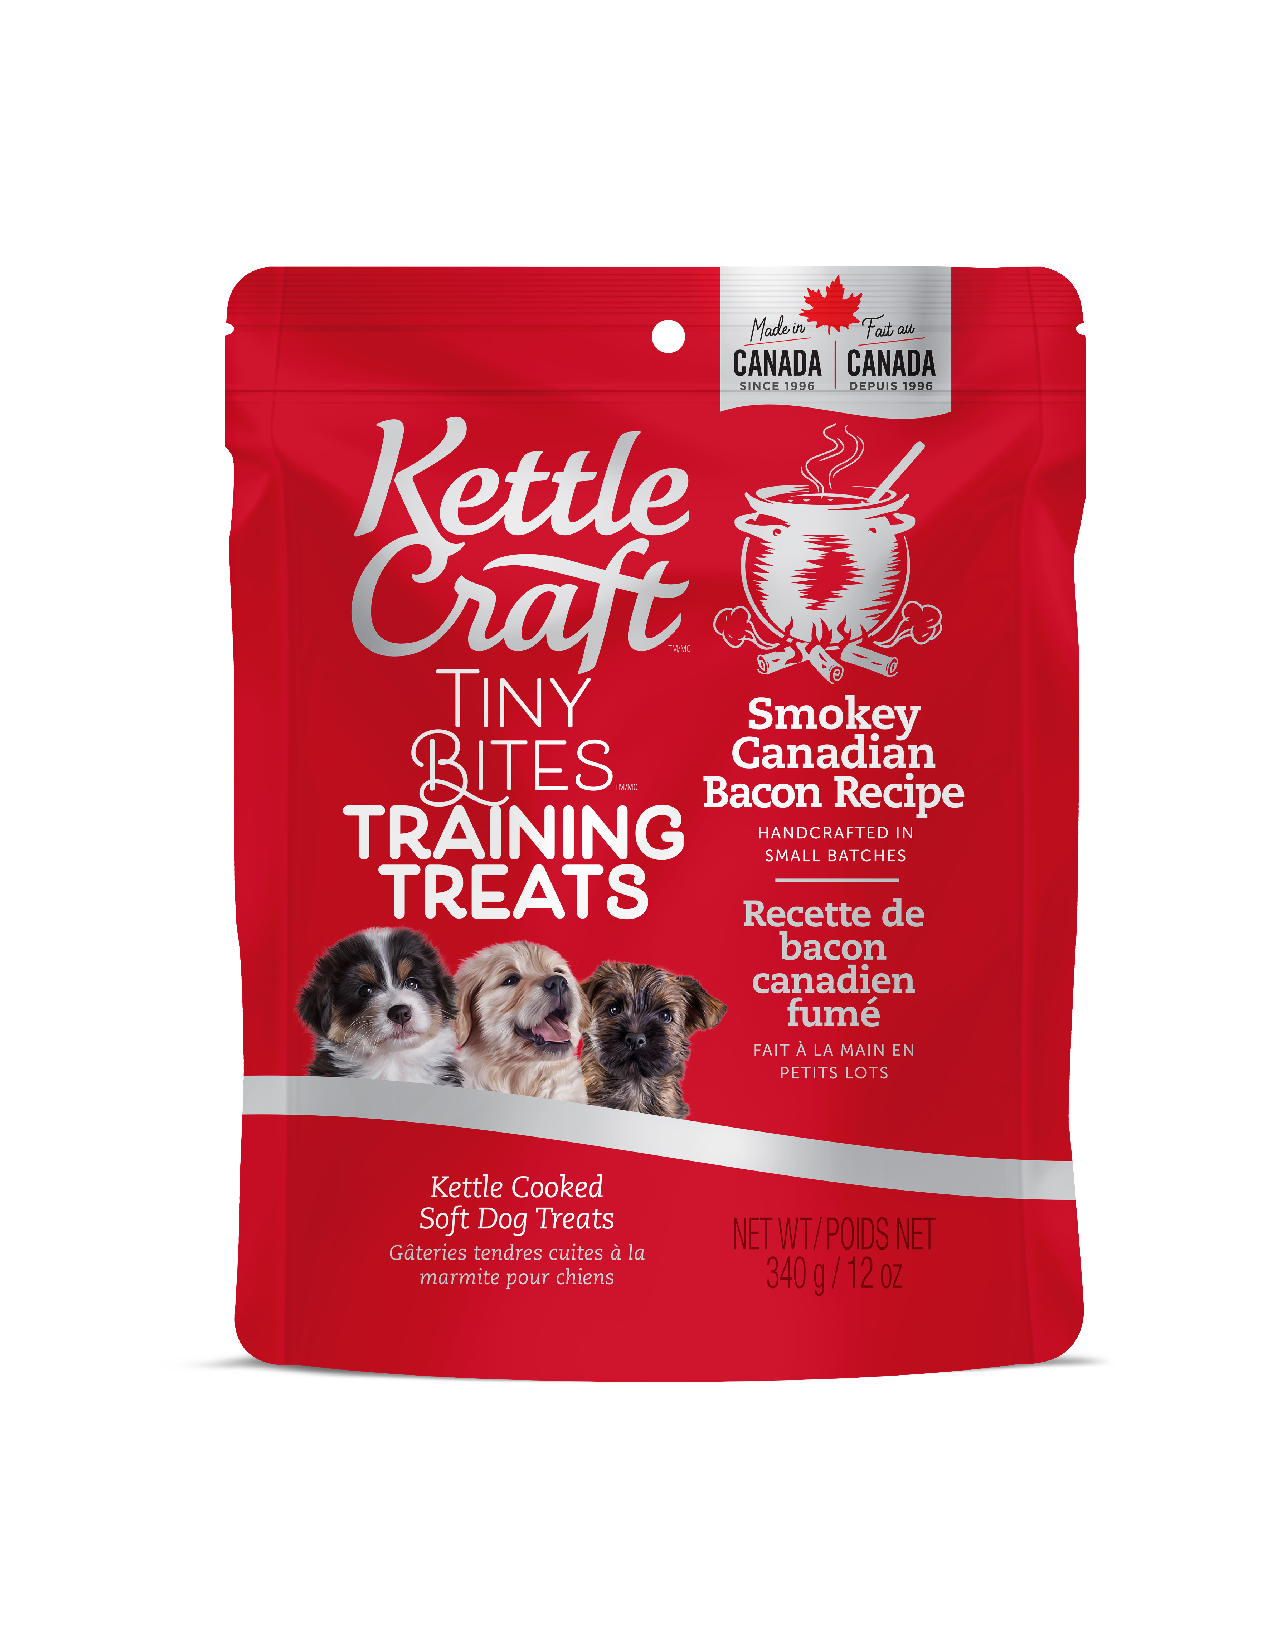 Kettle Craft Dog Tiny Bites Training Treats Smokey Canadian Bacon Recipe